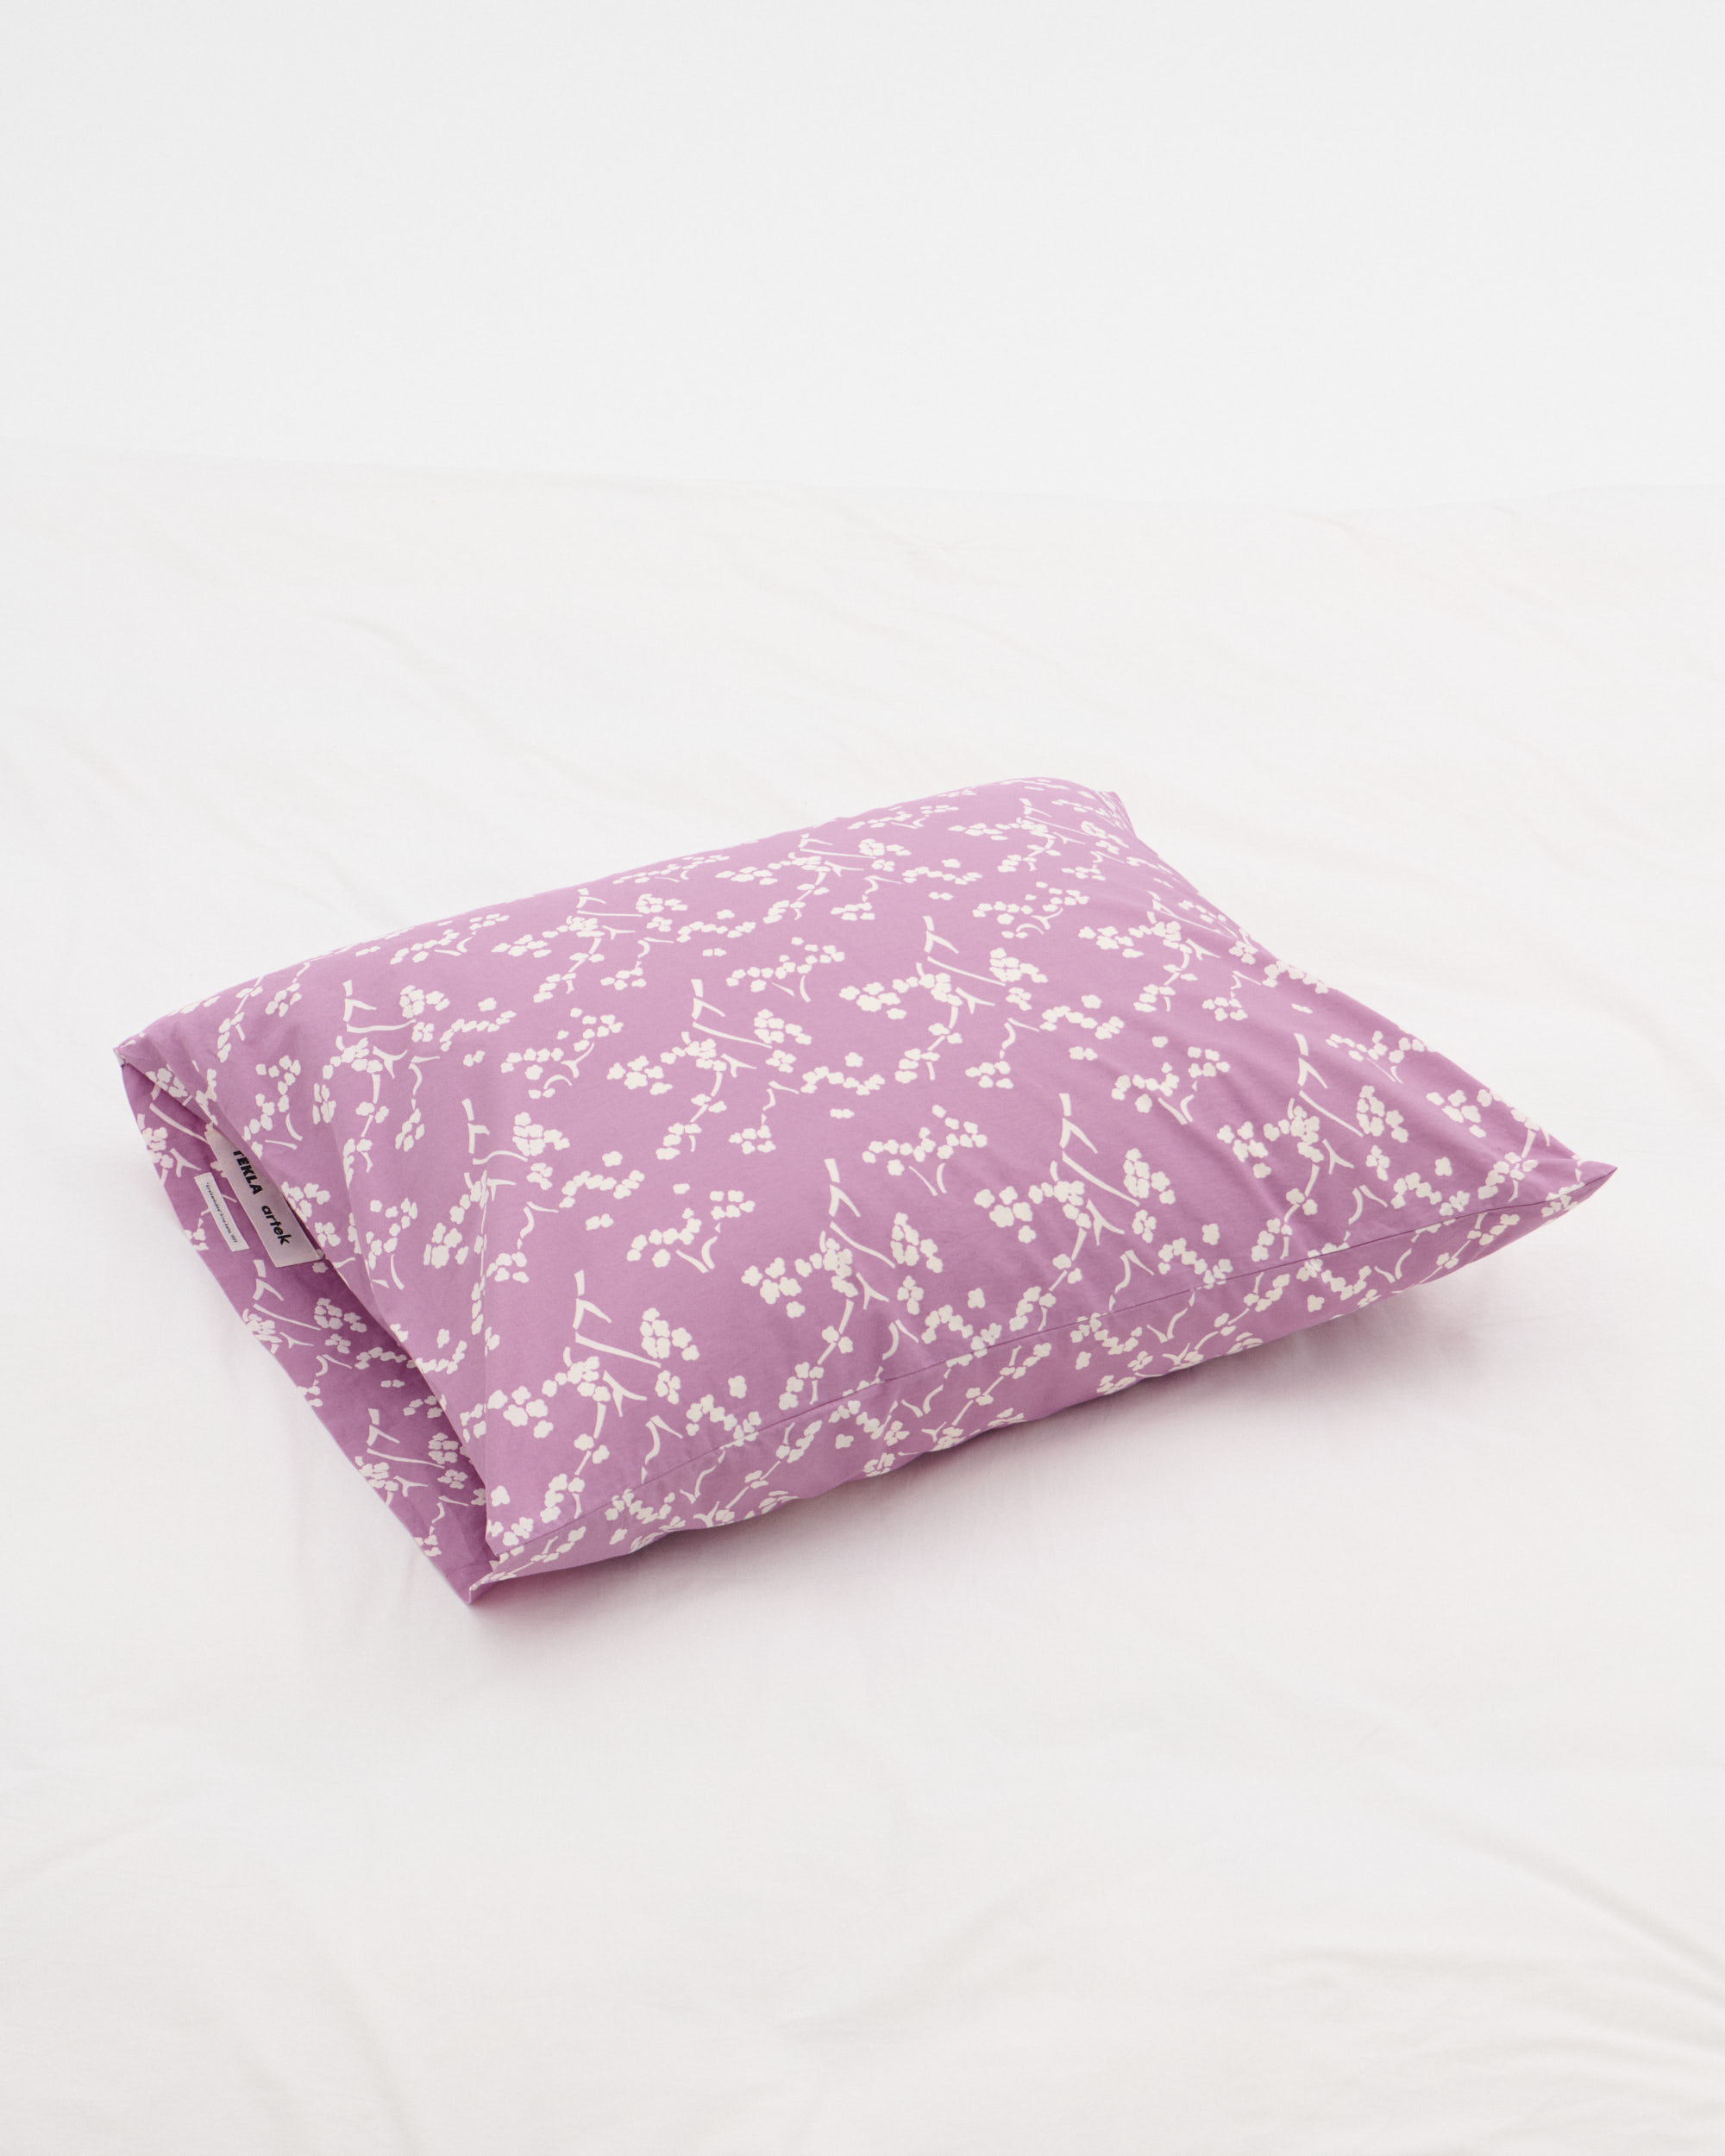 Percale pillow sham - Kirsikankukka Mallow Pink